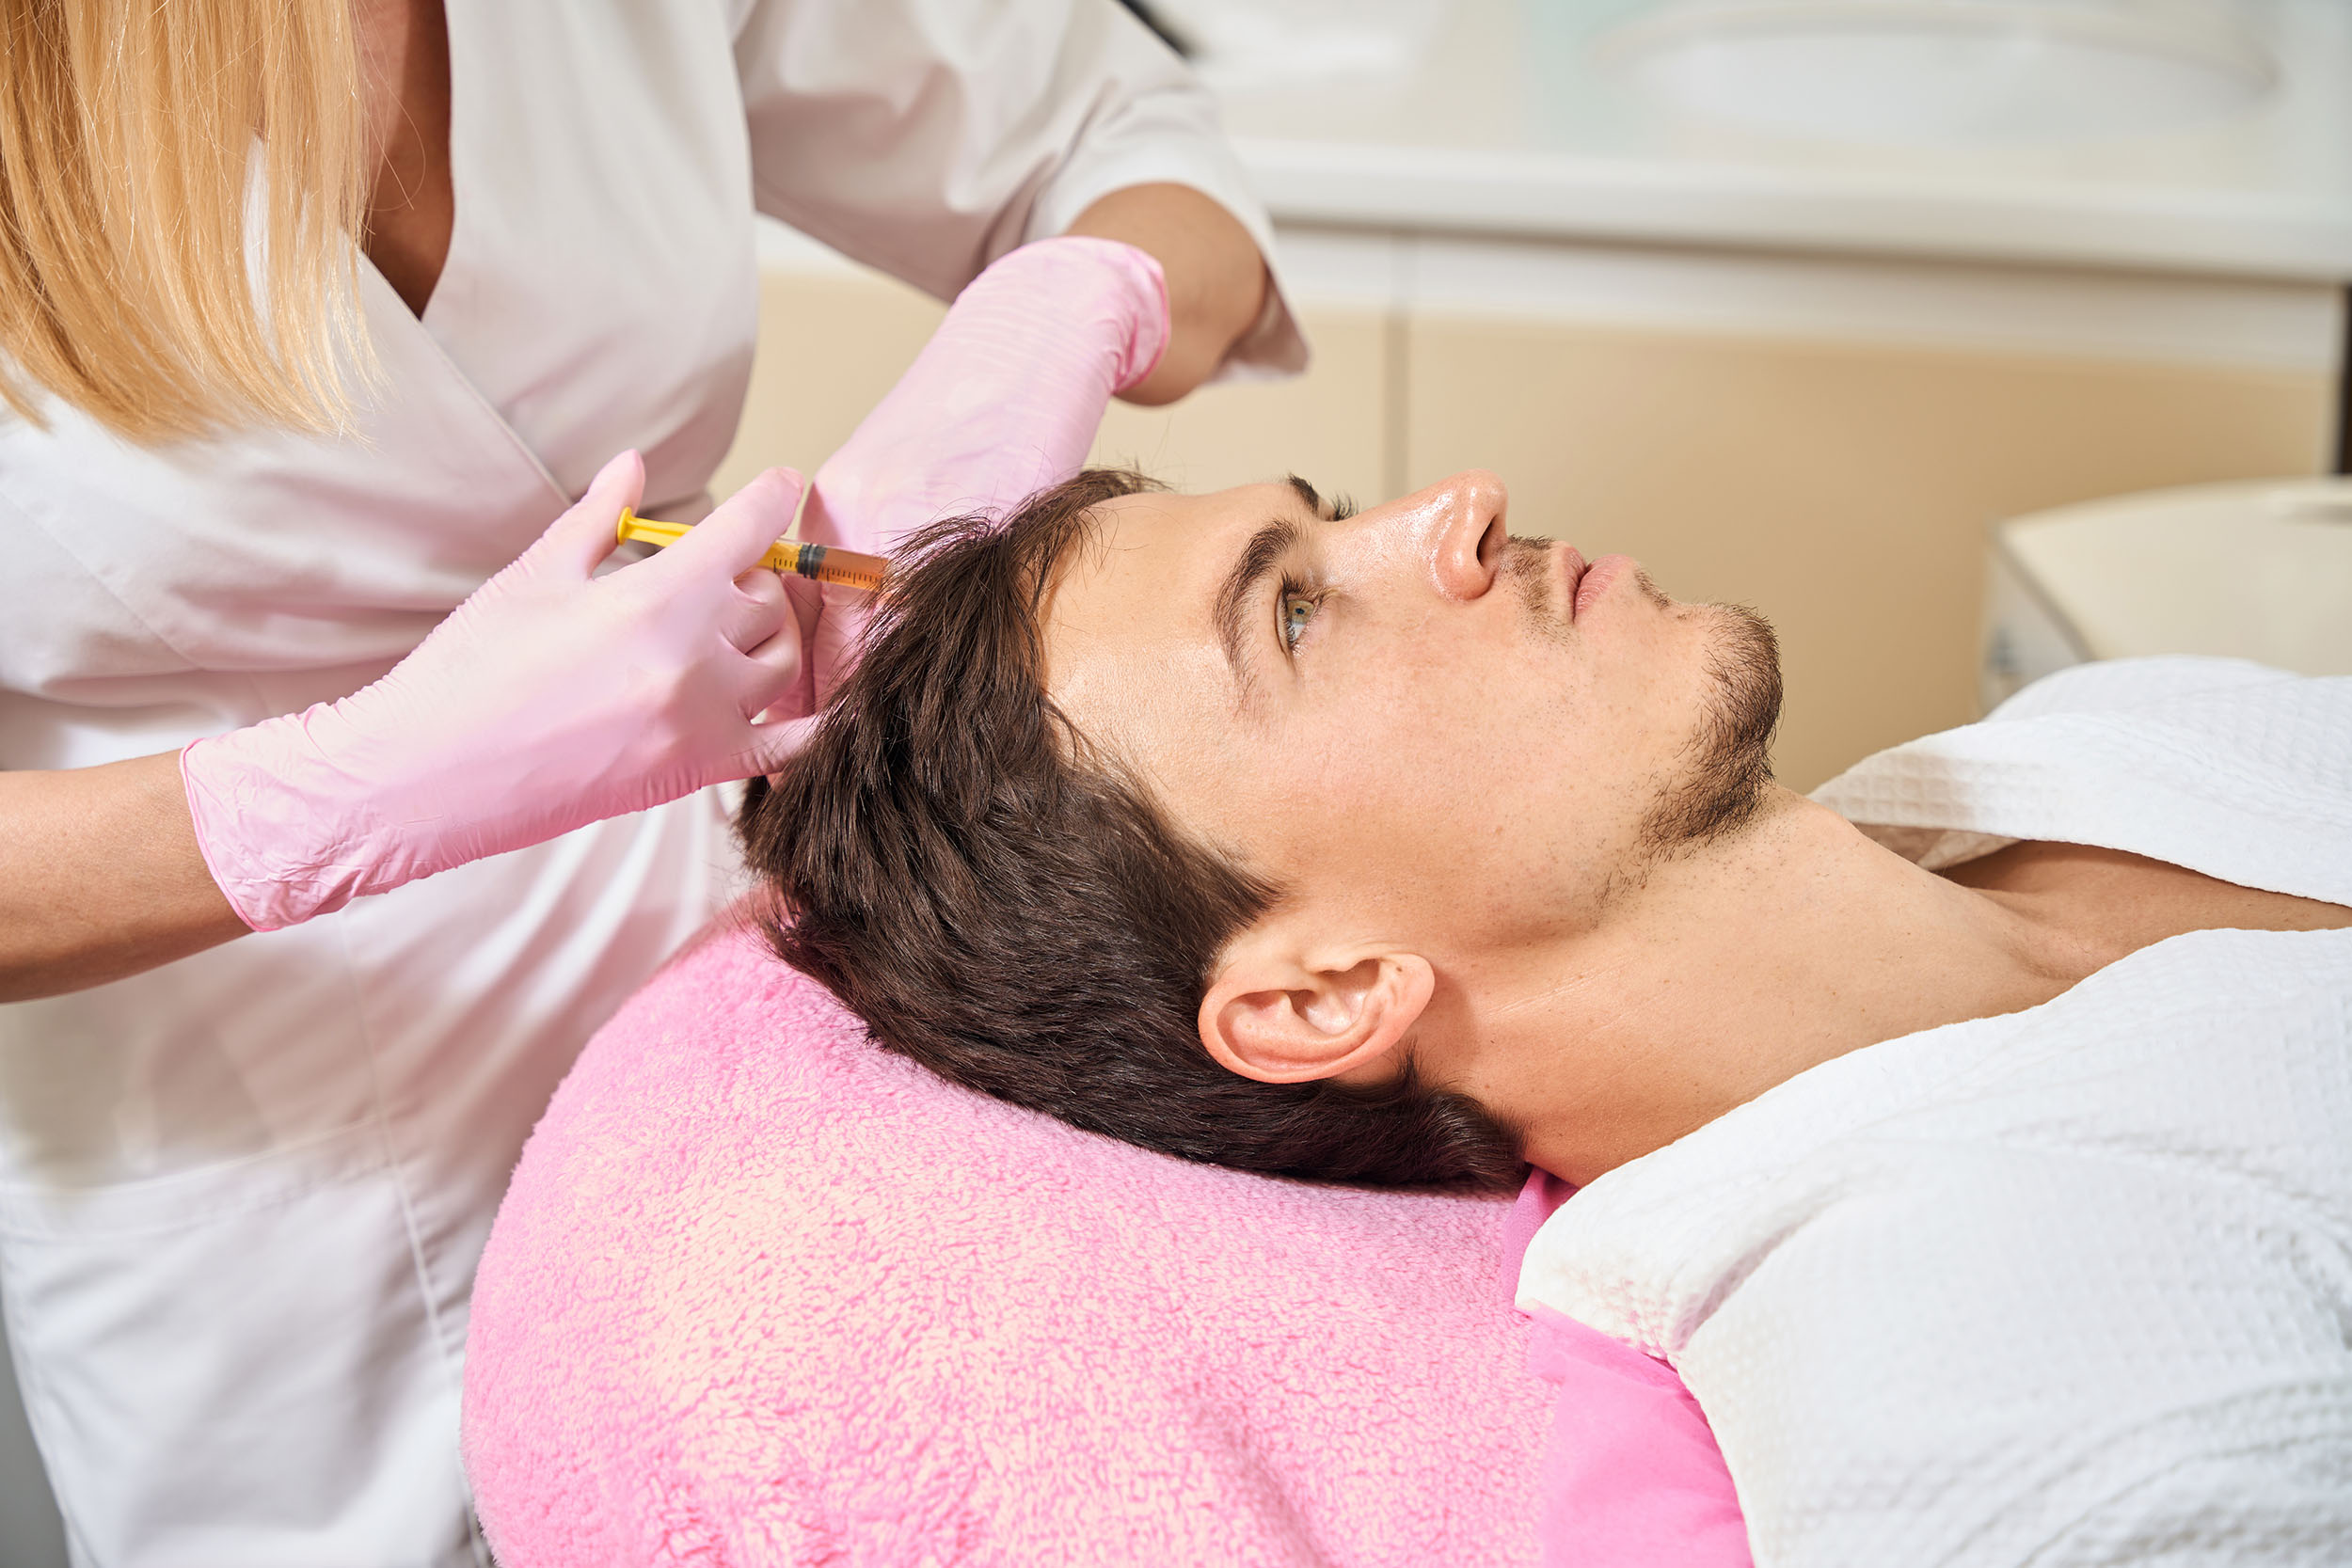 A man receives PRP hair restoration at a med spa.